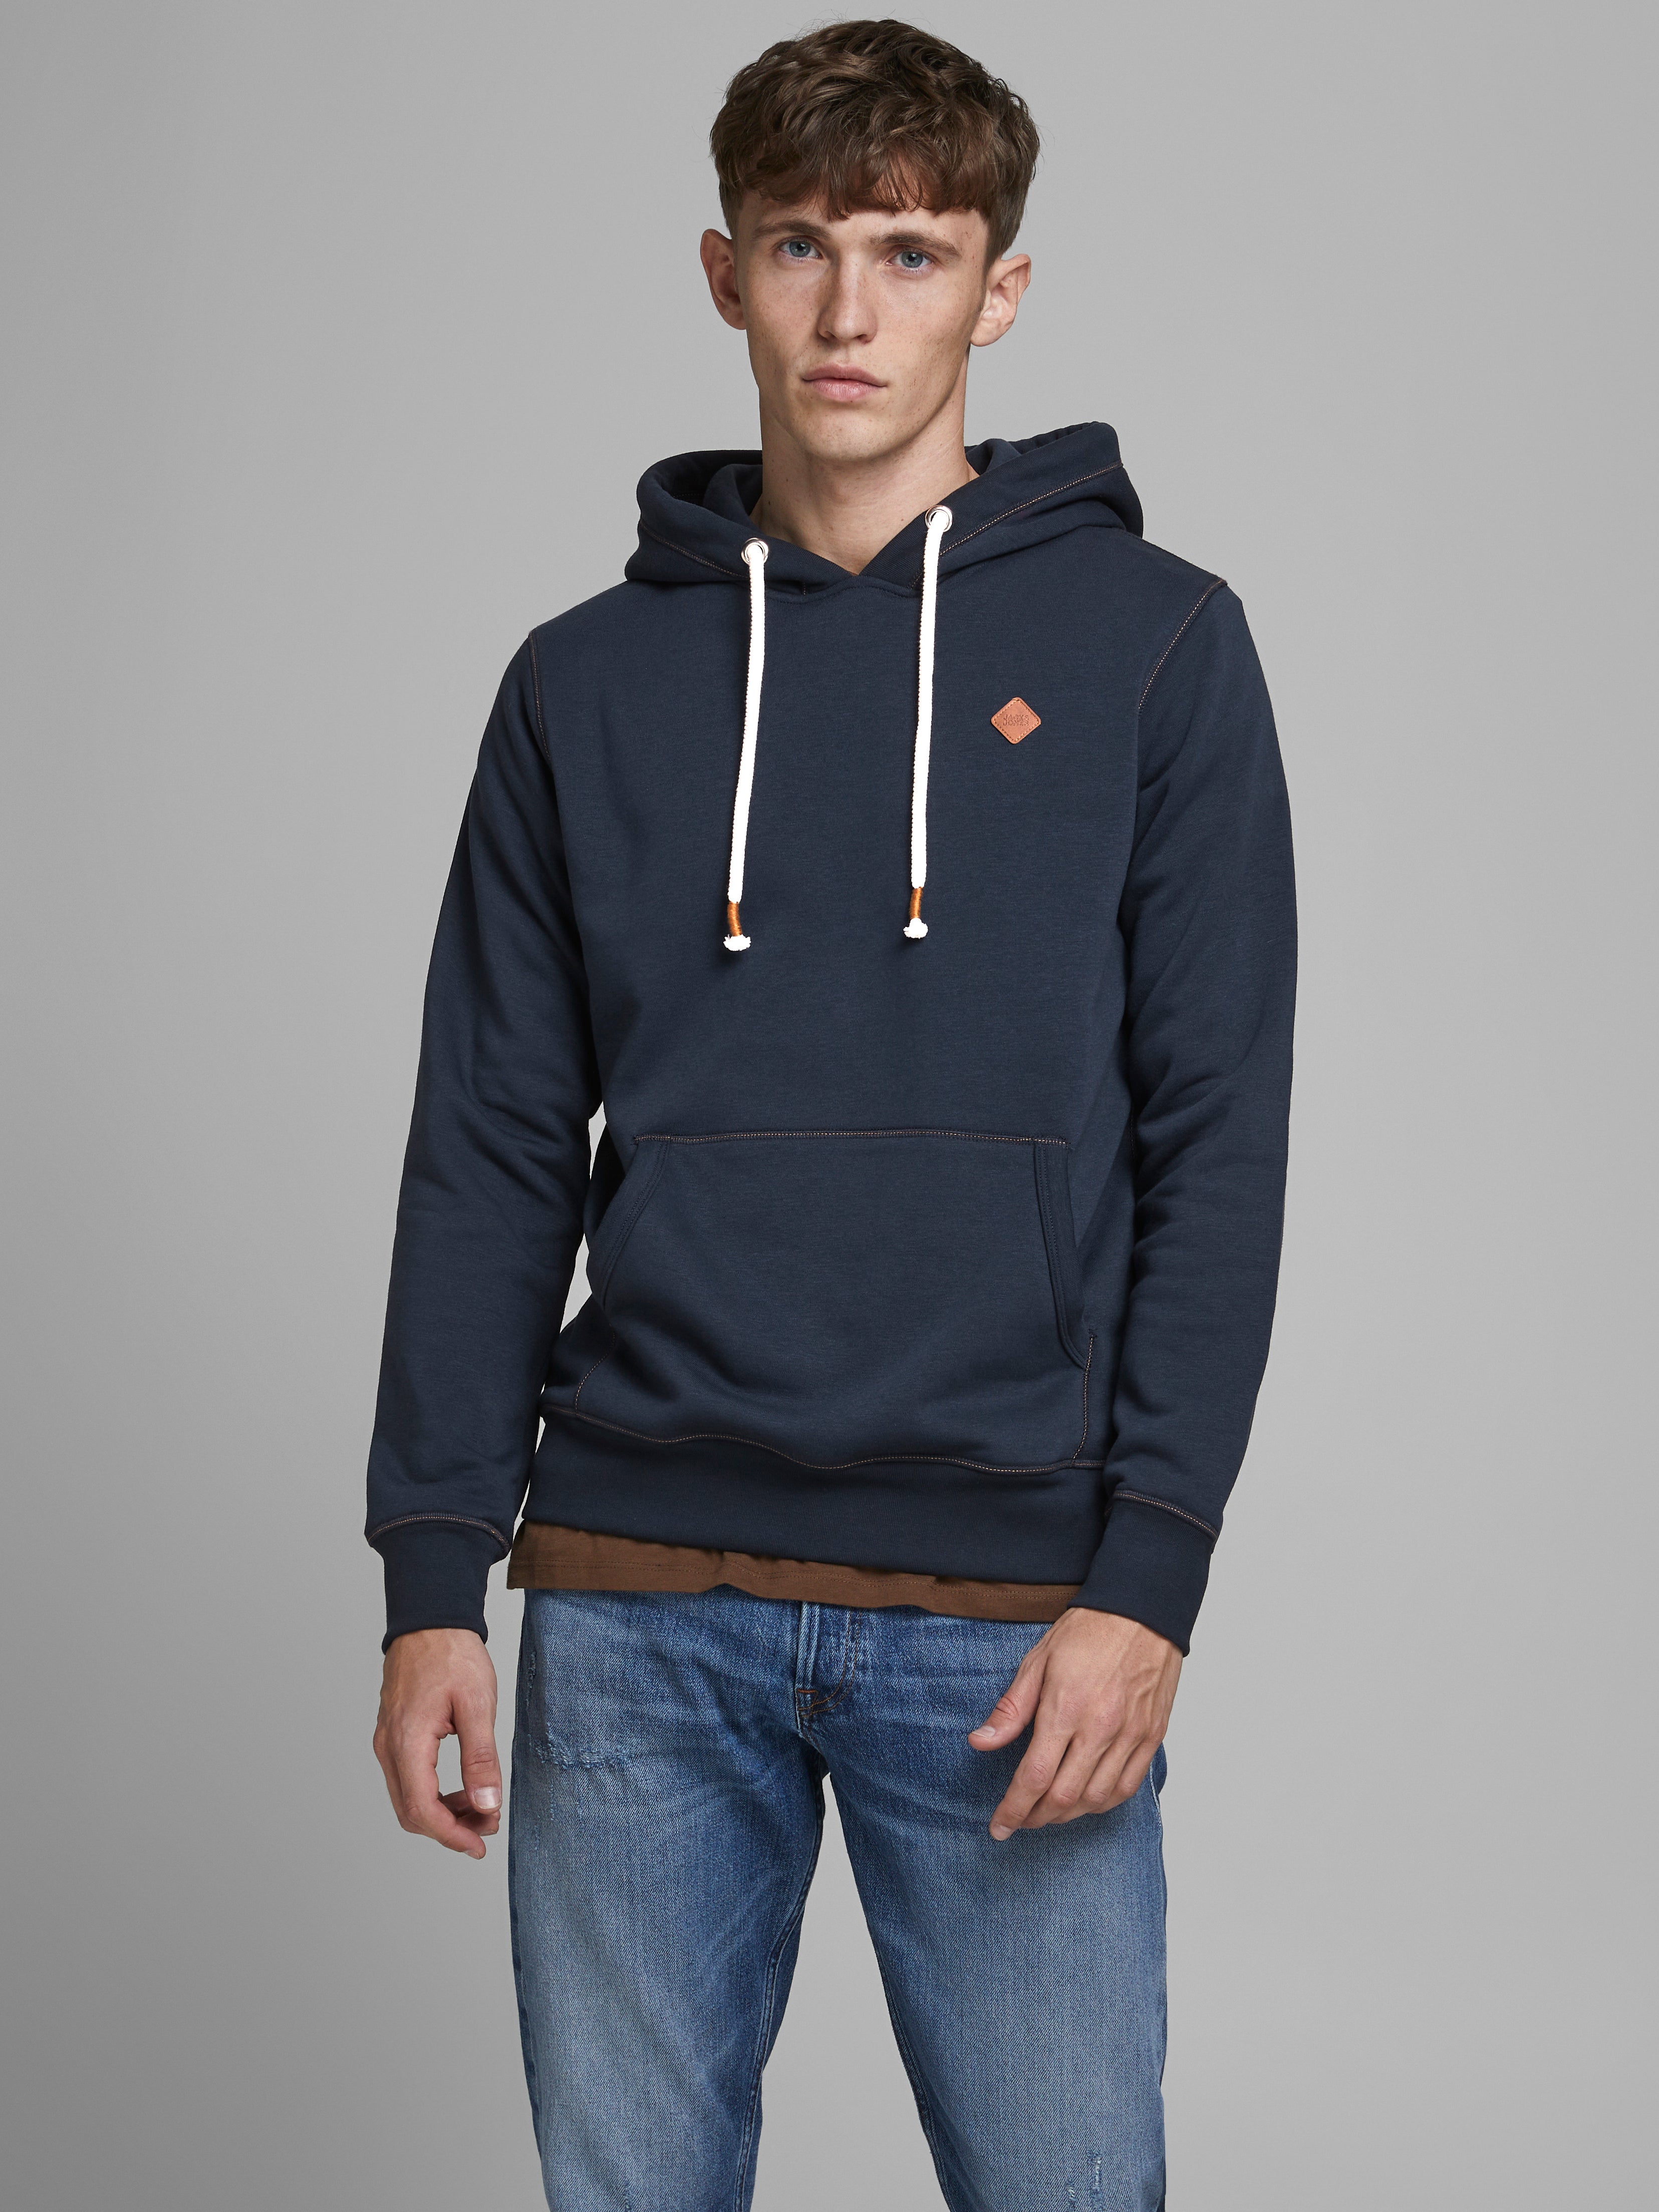 Gray XXL discount 56% MEN FASHION Jumpers & Sweatshirts Sports Jack & Jones sweatshirt 